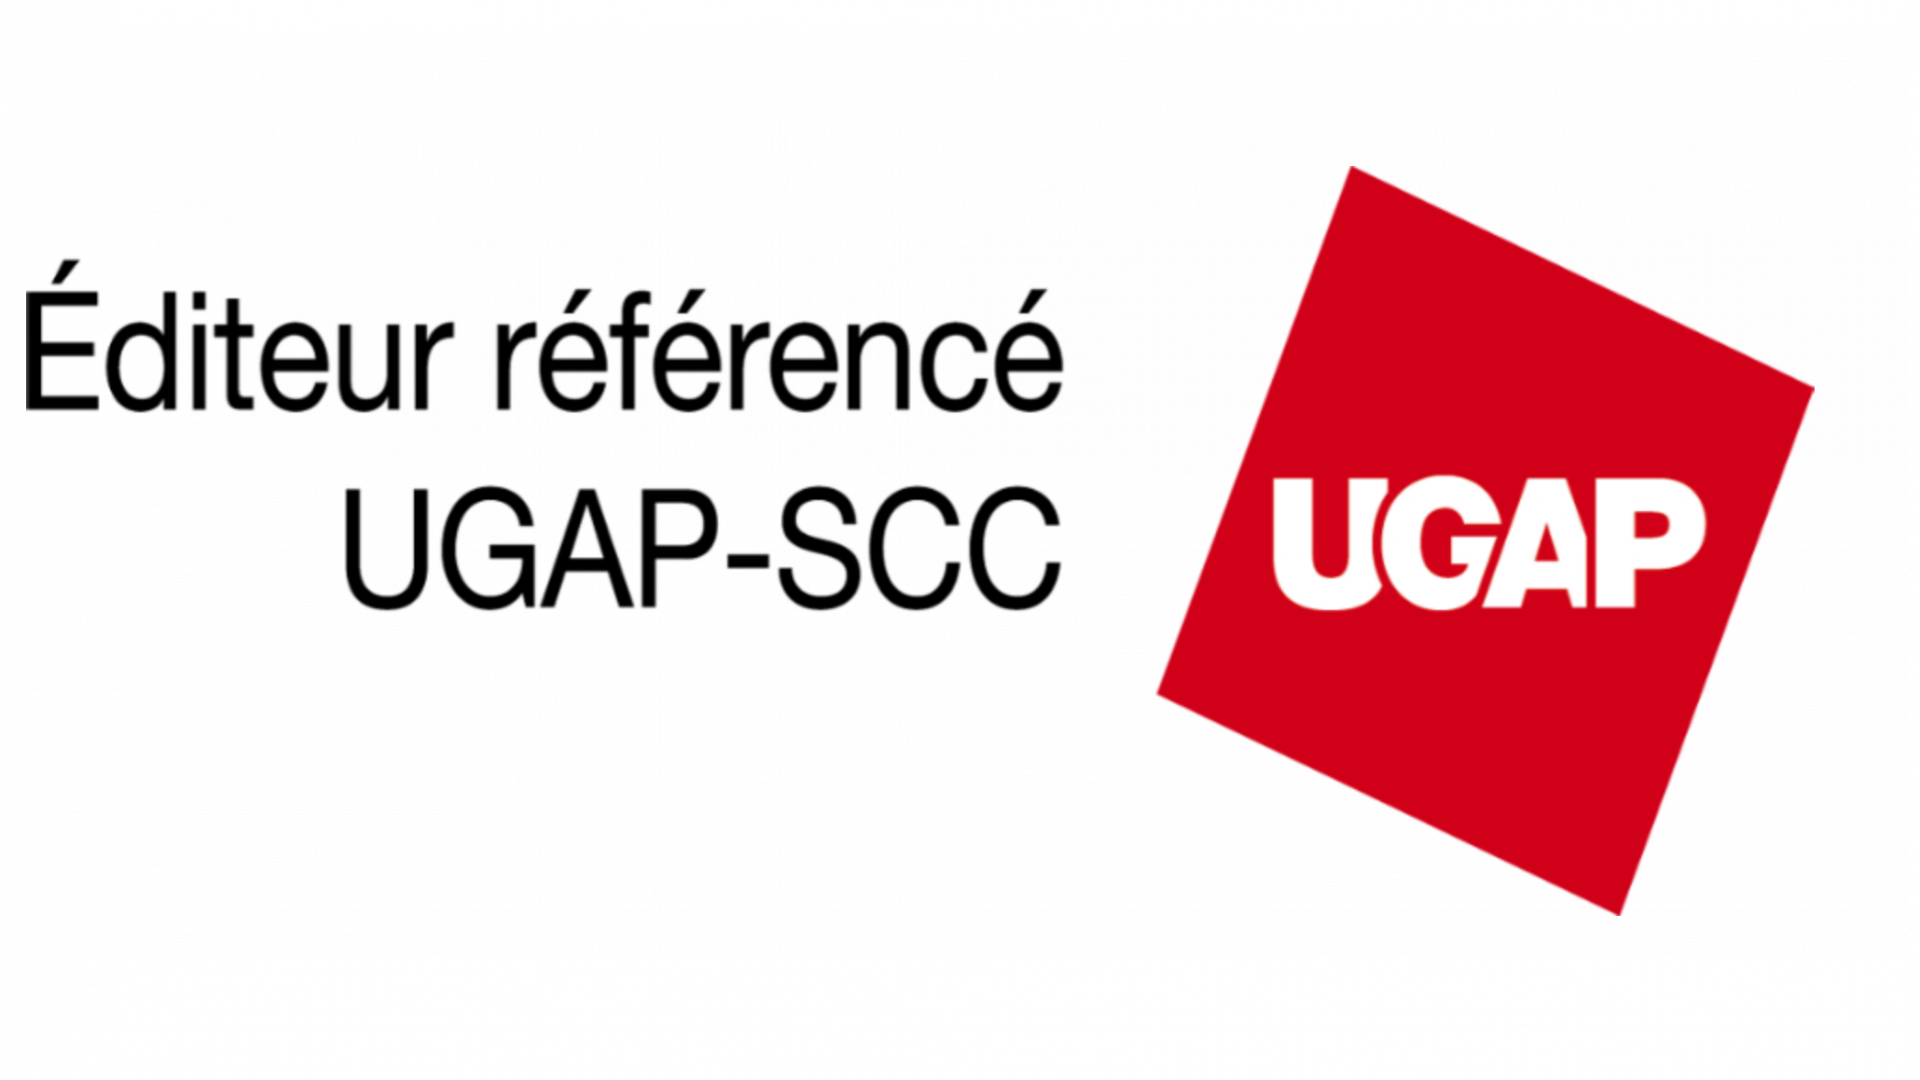 editeur_ref_UGAP_SCC-png RESIZE